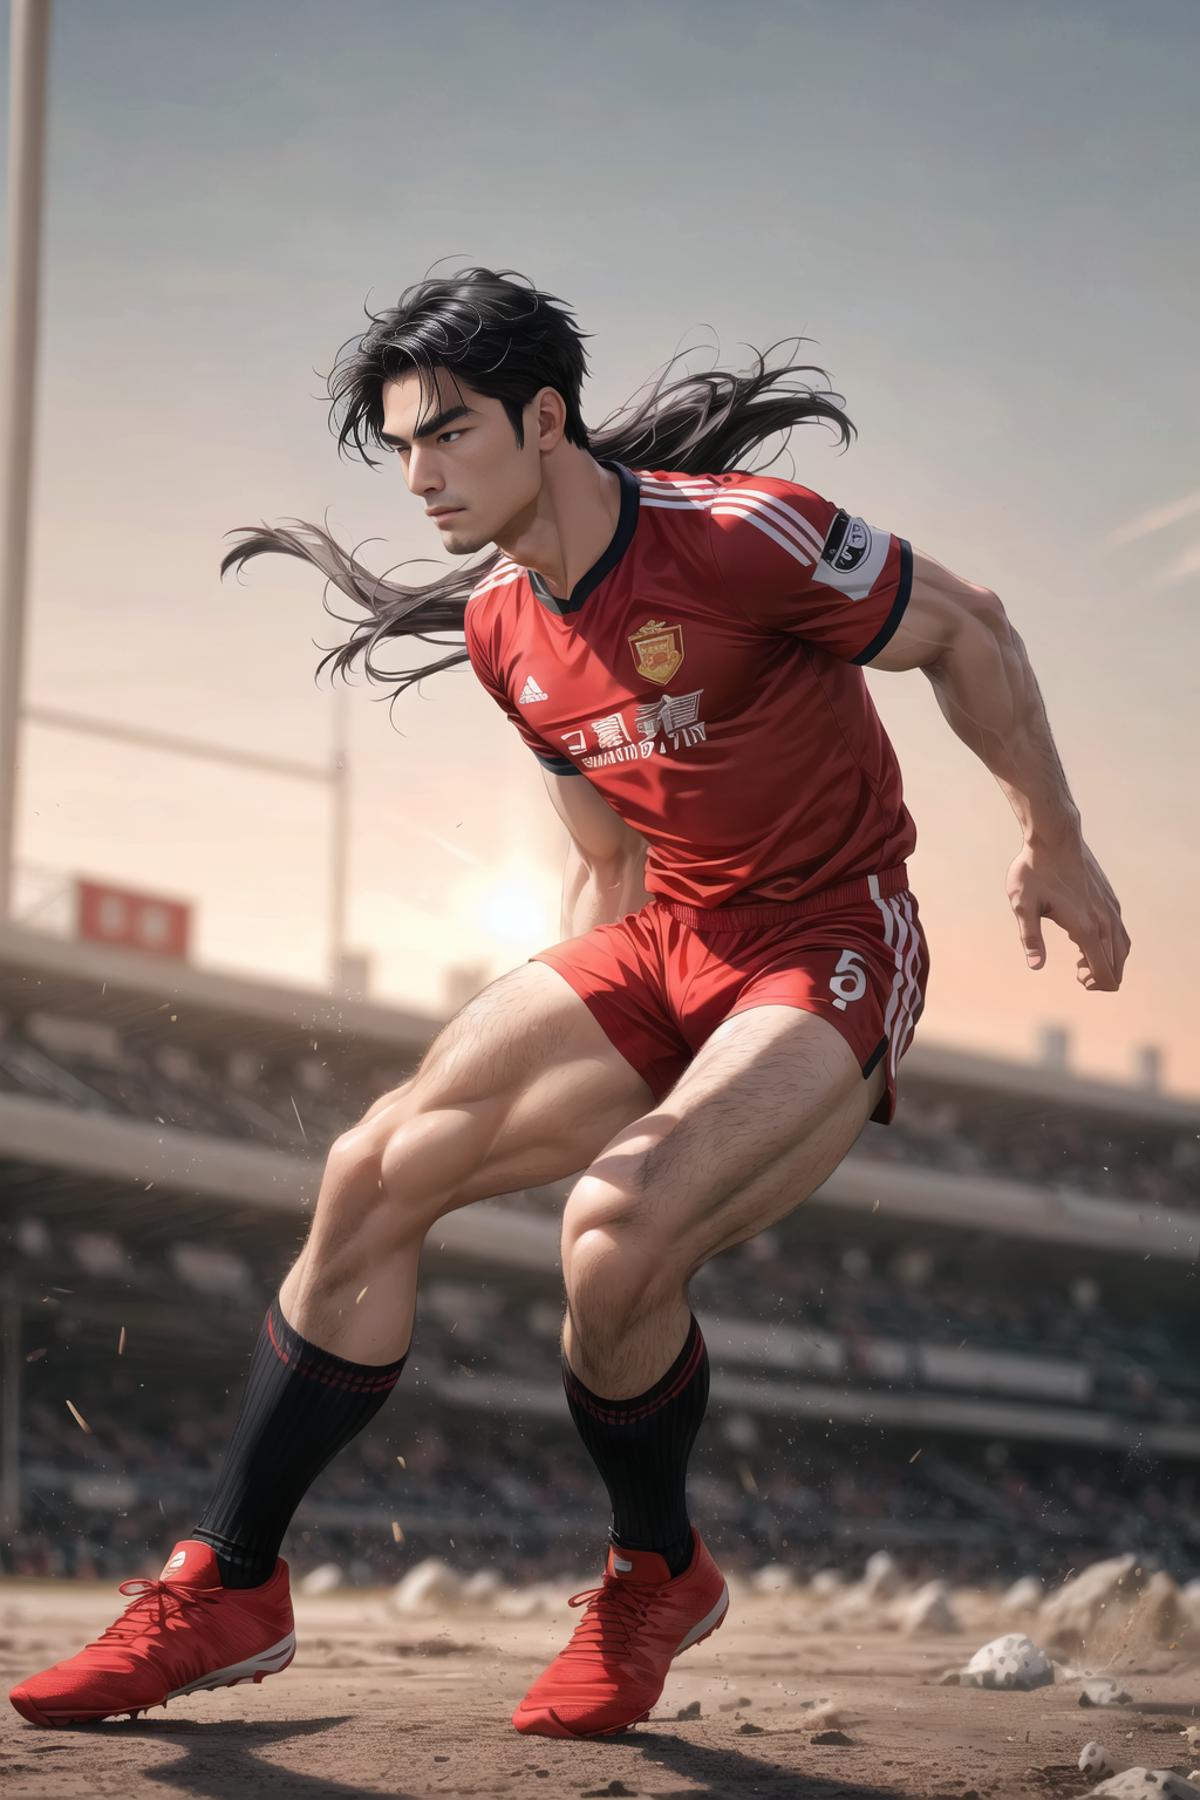 Retro Soccer image by DoctorStasis